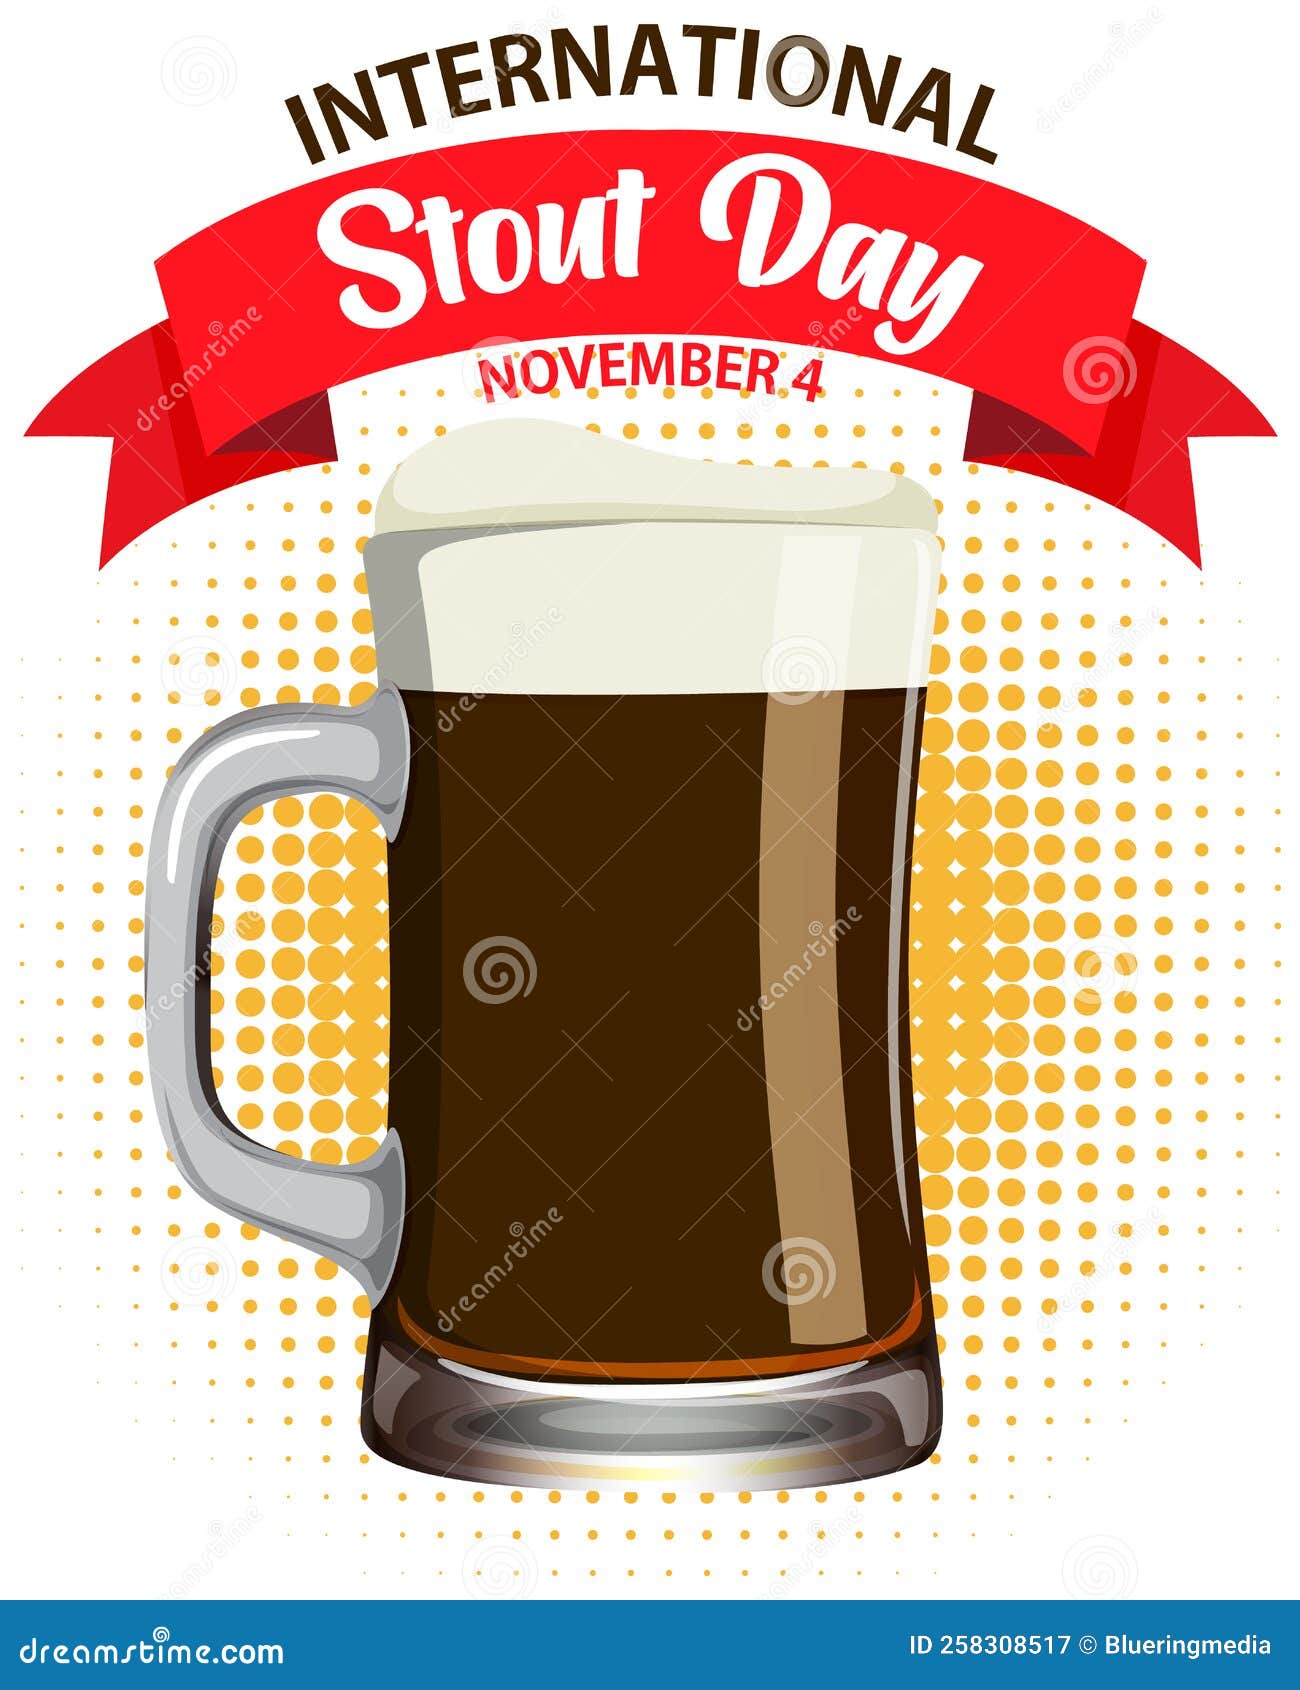 International Stout Day Poster Design Stock Vector Illustration of